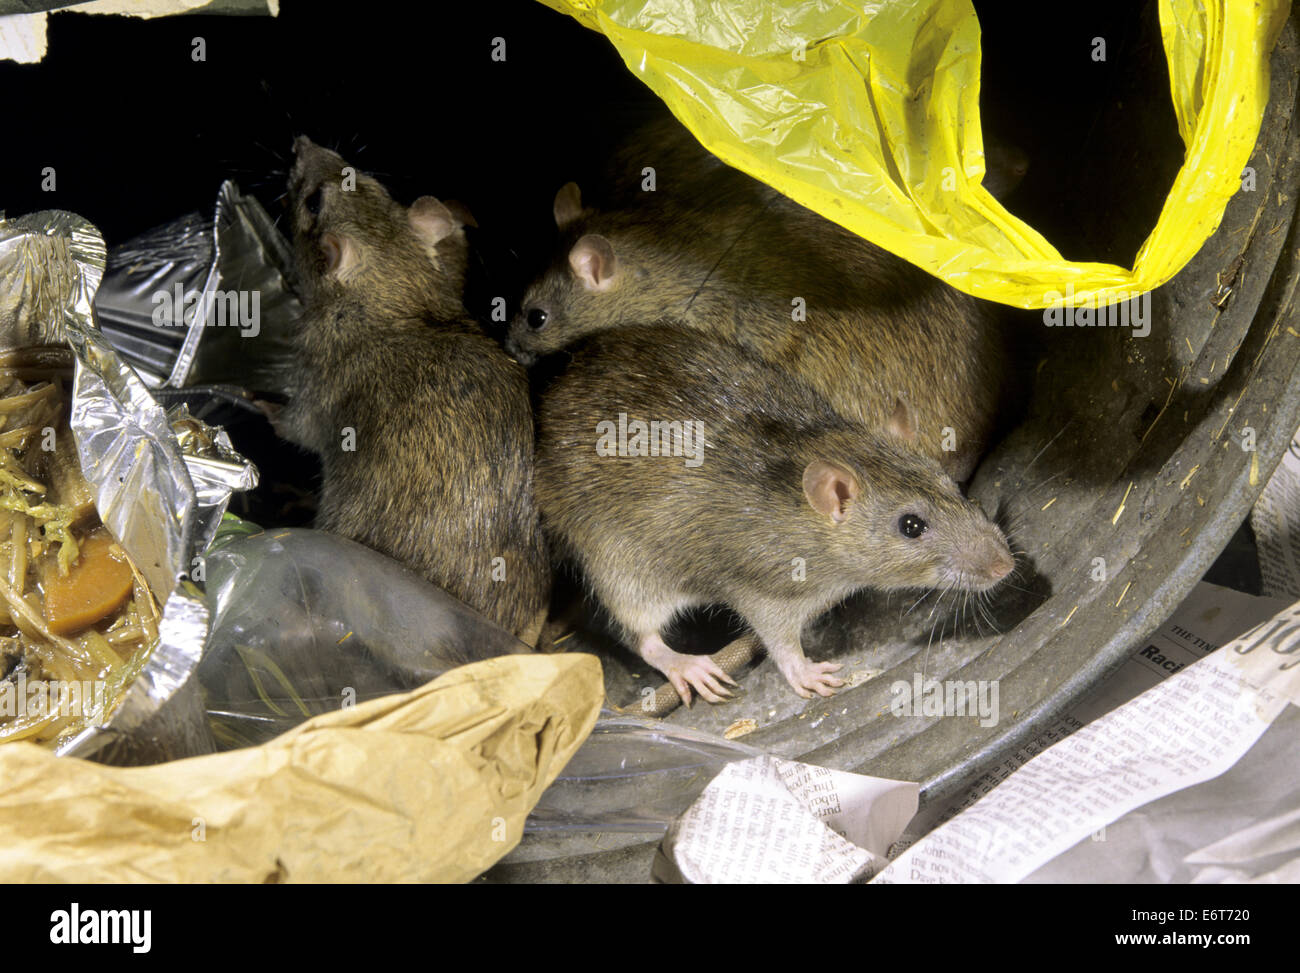 Brown Rat - Rattus norvegicus Stock Photo